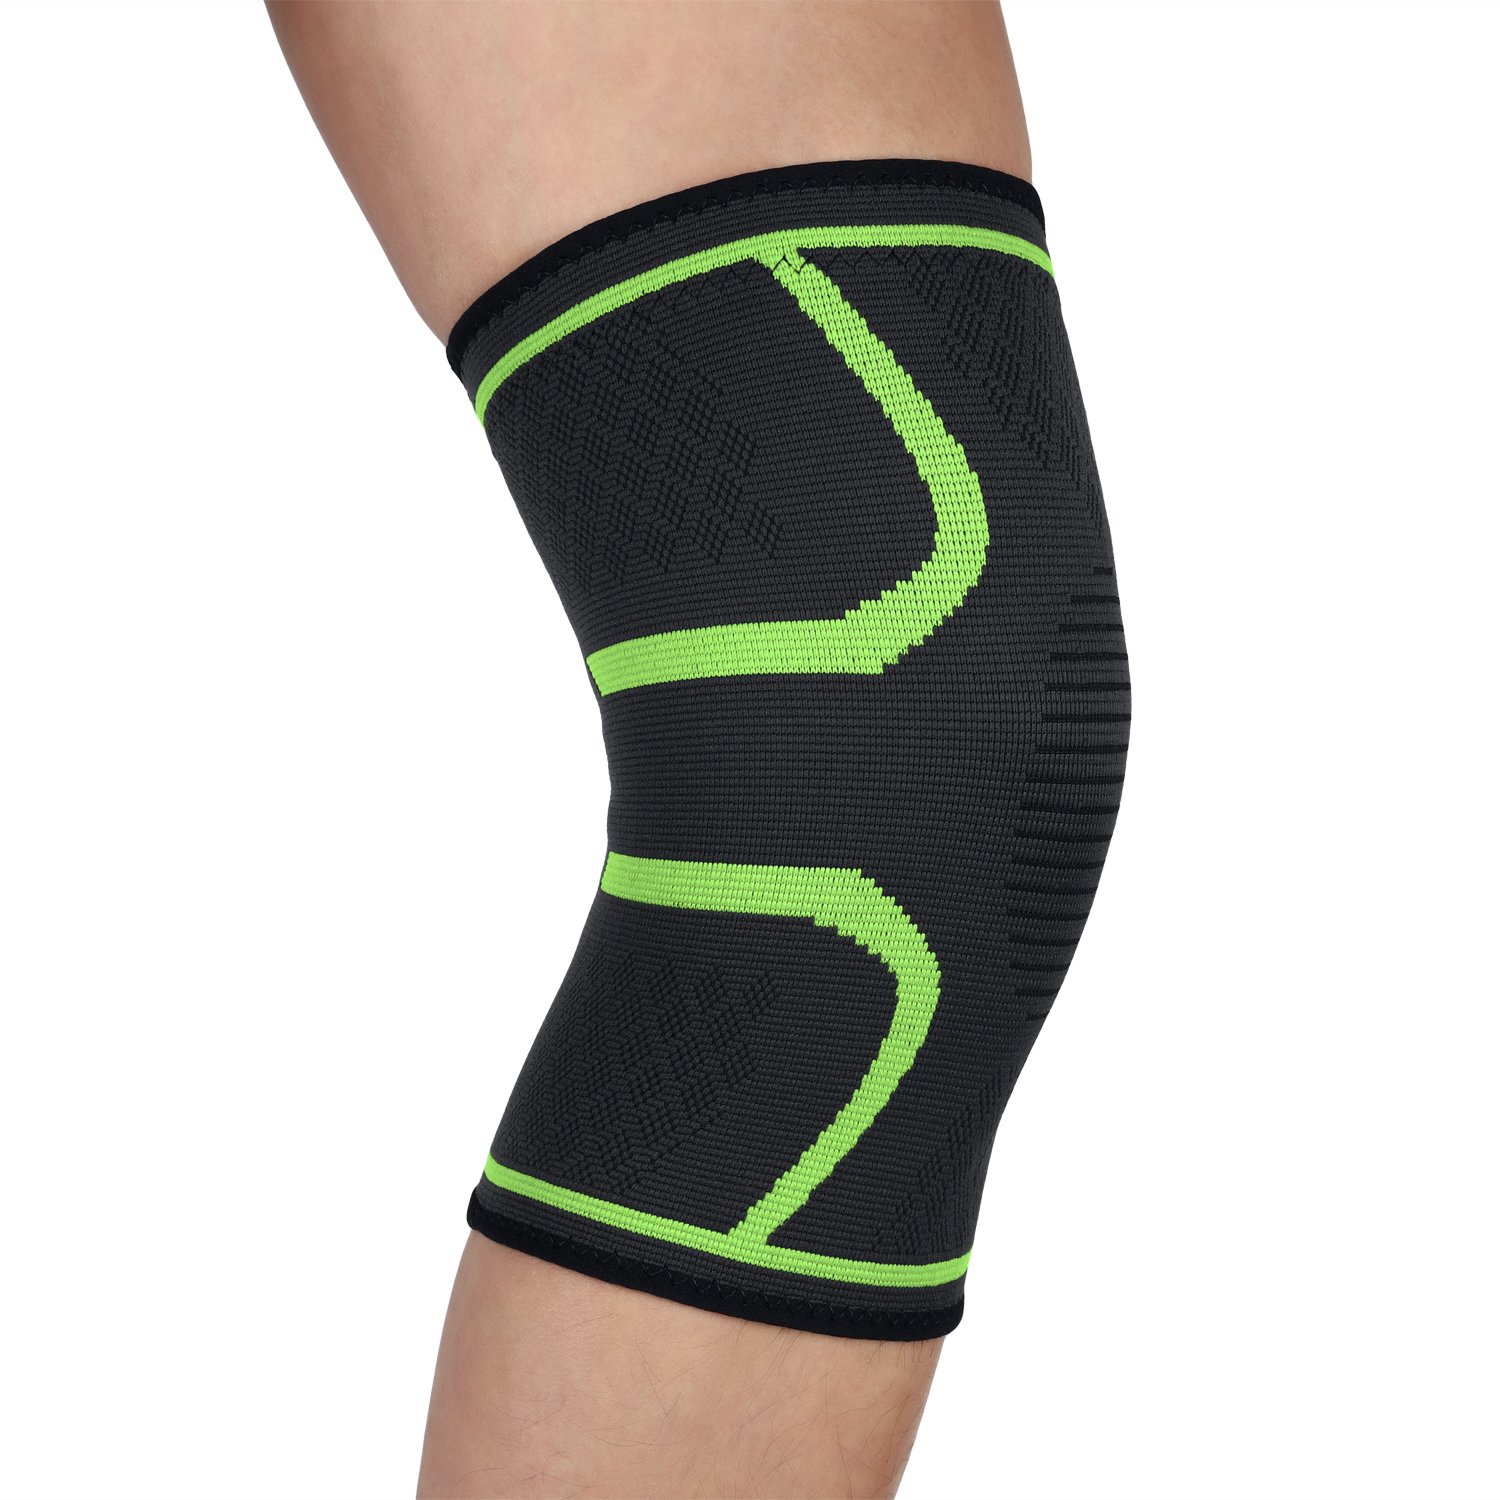 2 Pack Knee Brace For Joint Pain Arthritis Relief, Running, Arthritis ...